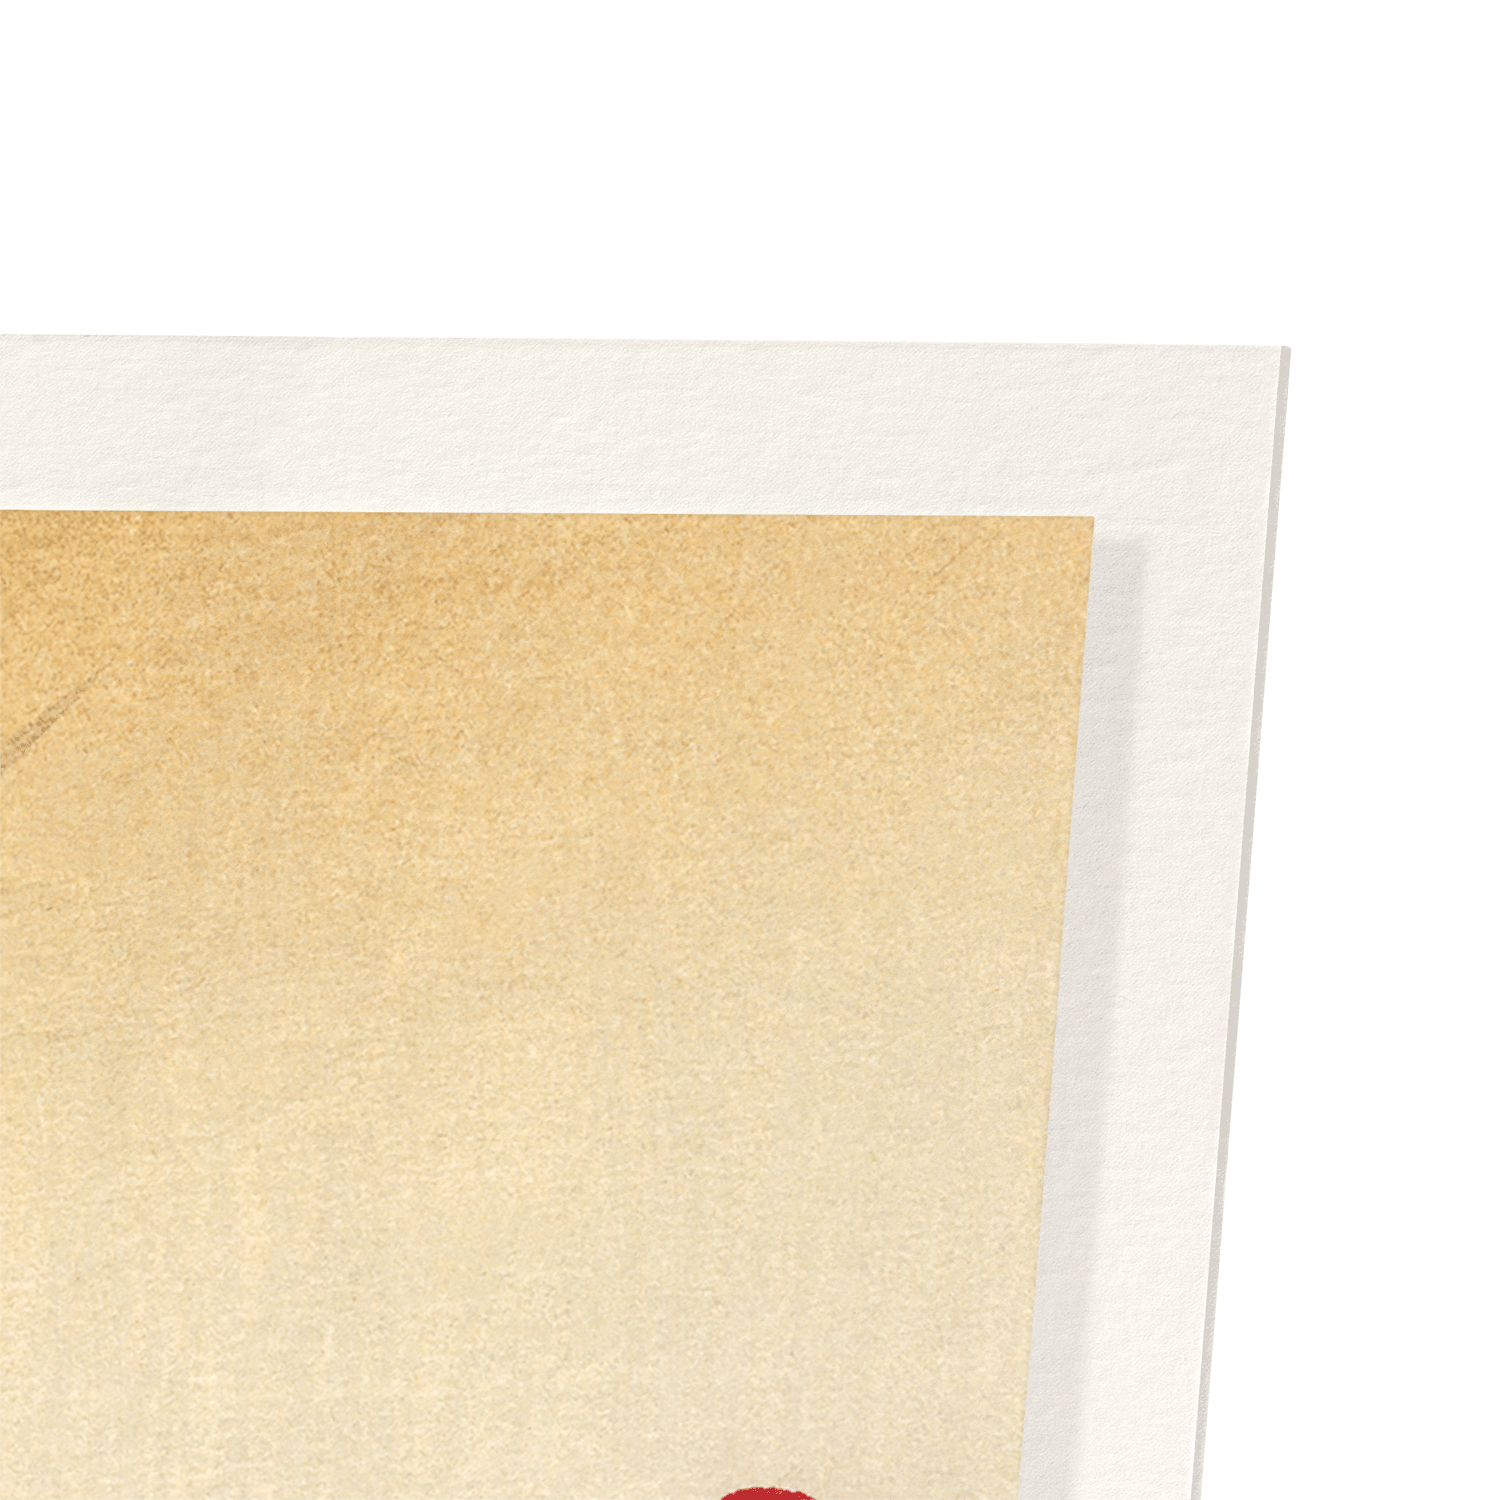 RED PLUM BLOSSOM TREE: Japanese Art Print